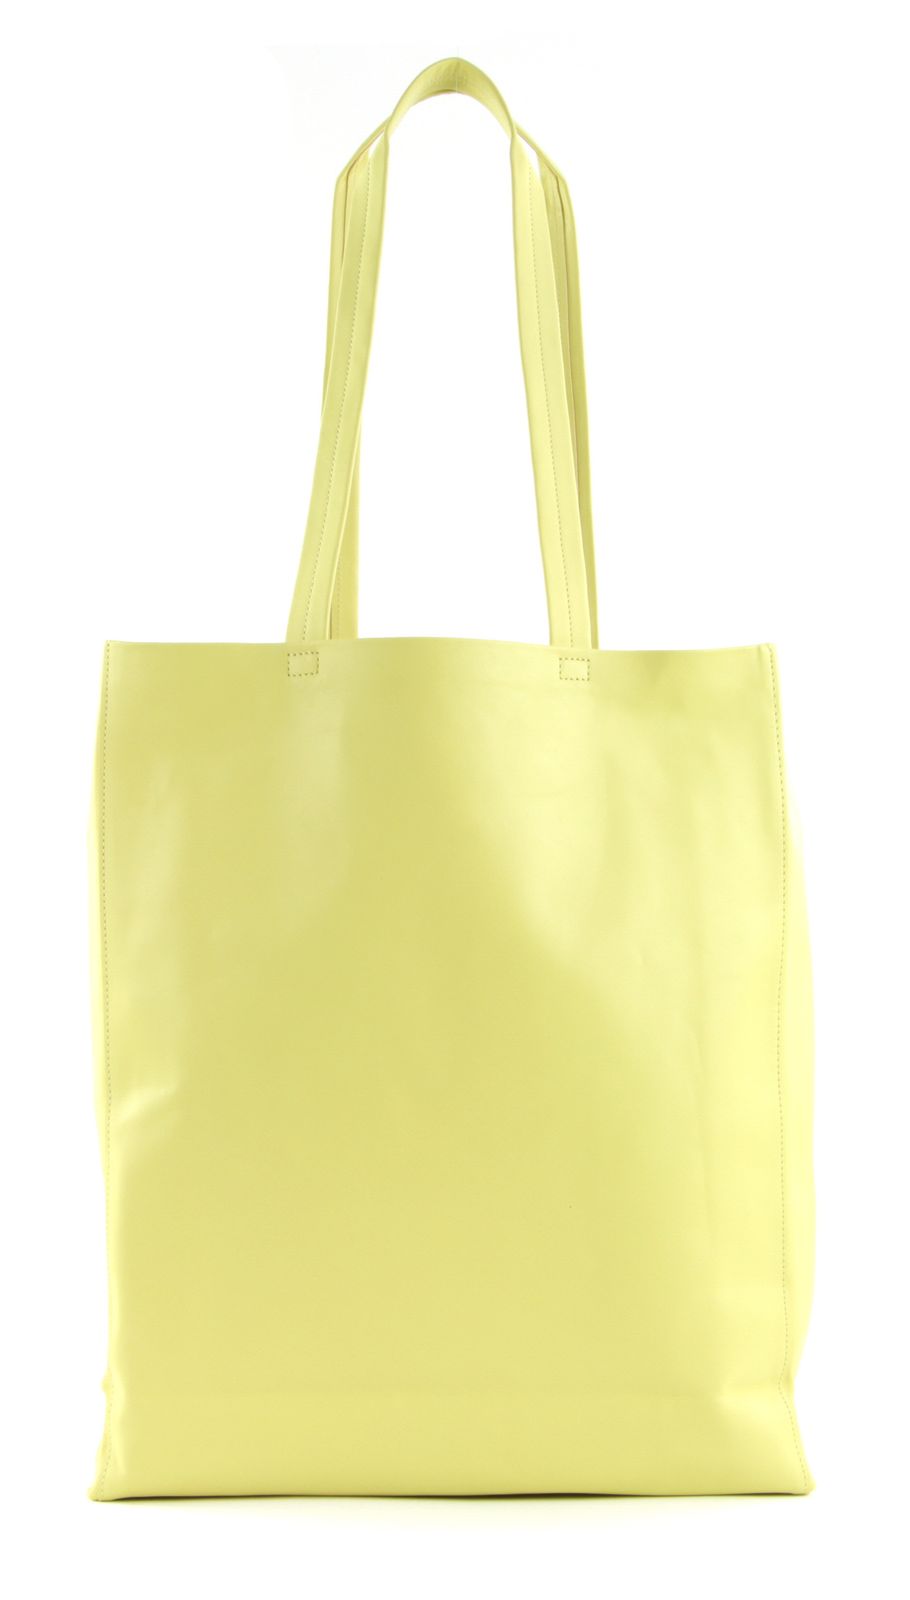 BREE Simply 2 Shoulder Bag Lemongrass | Buy bags, purses & accessories ...